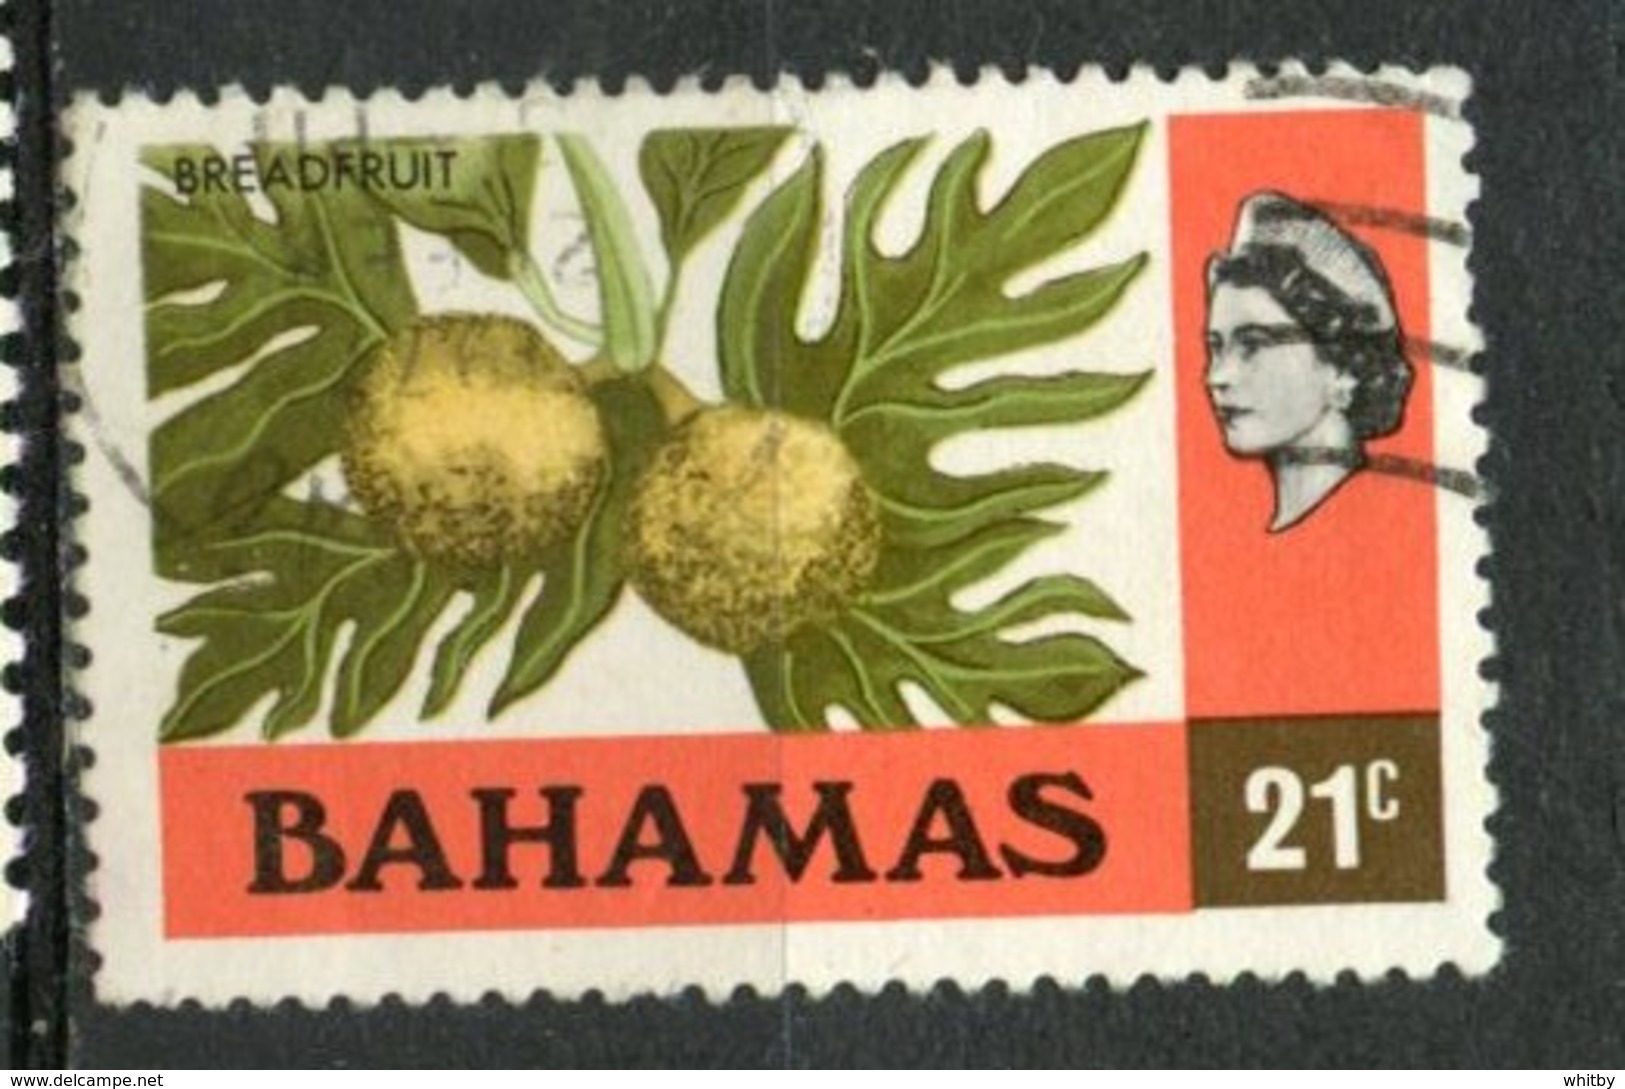 Bahamas 1976 21c Breadfruit Issue #399 - Bahamas (1973-...)